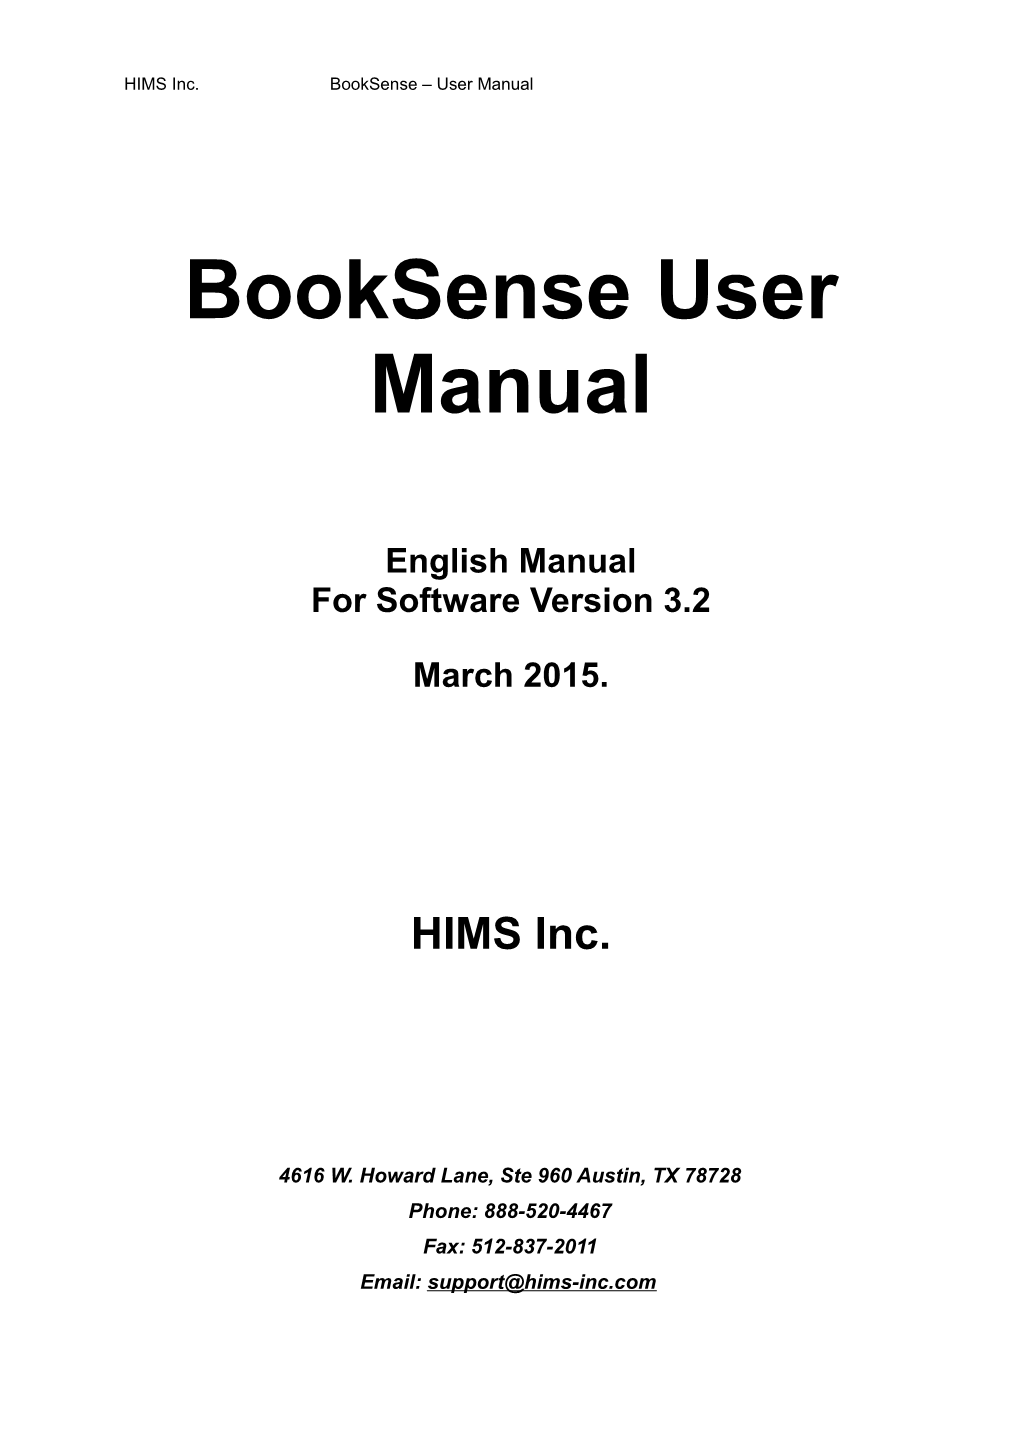 HIMS Inc. Booksense User Manual